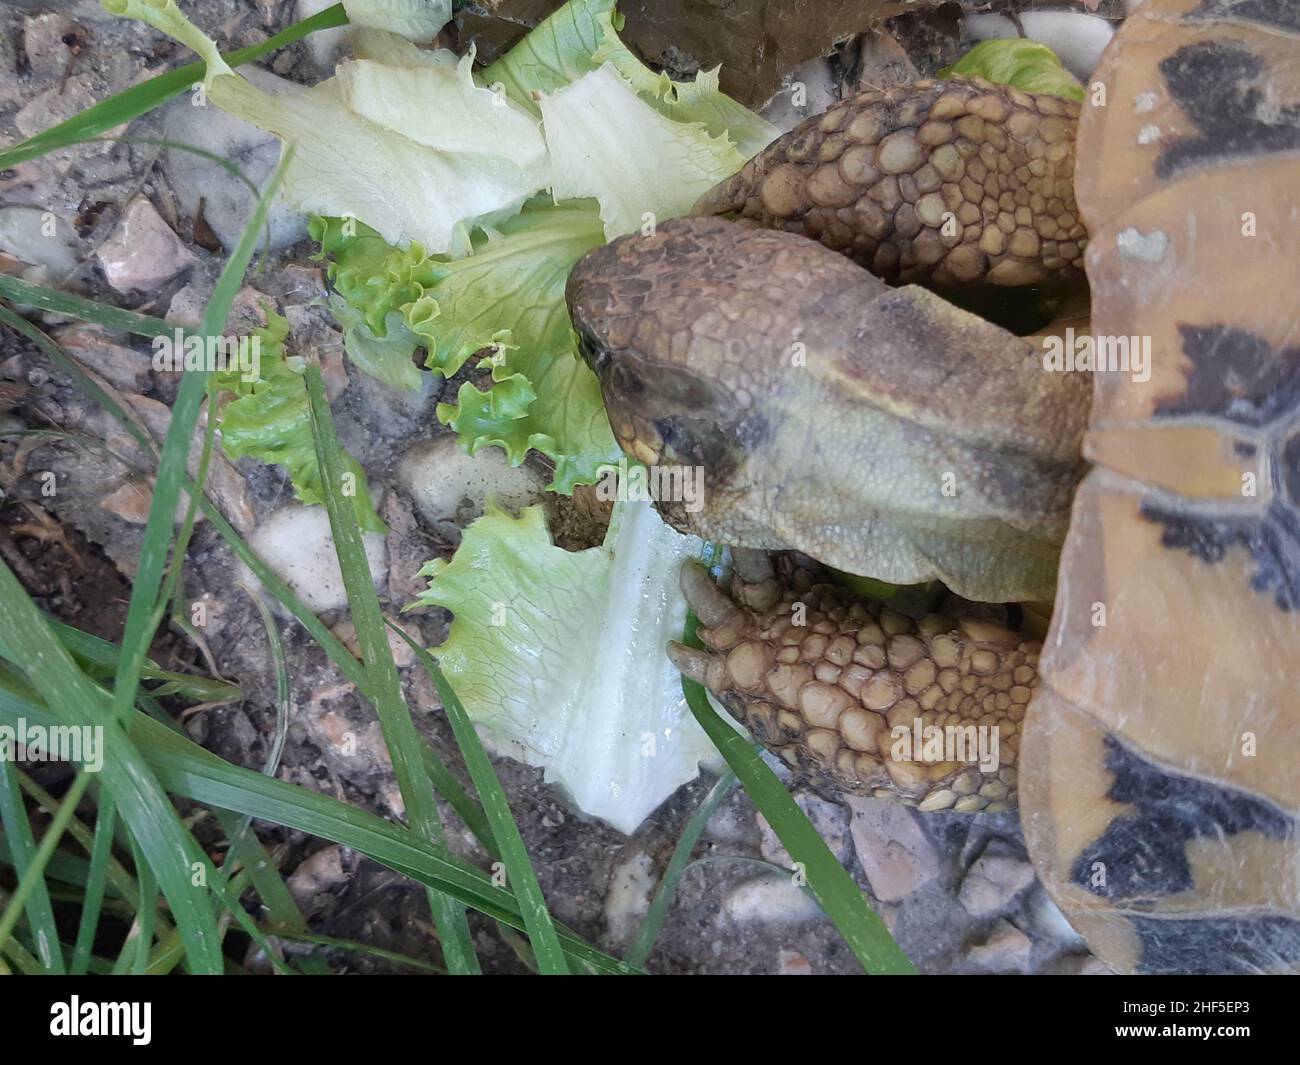 Domestic turtle that eats salad Stock Photo